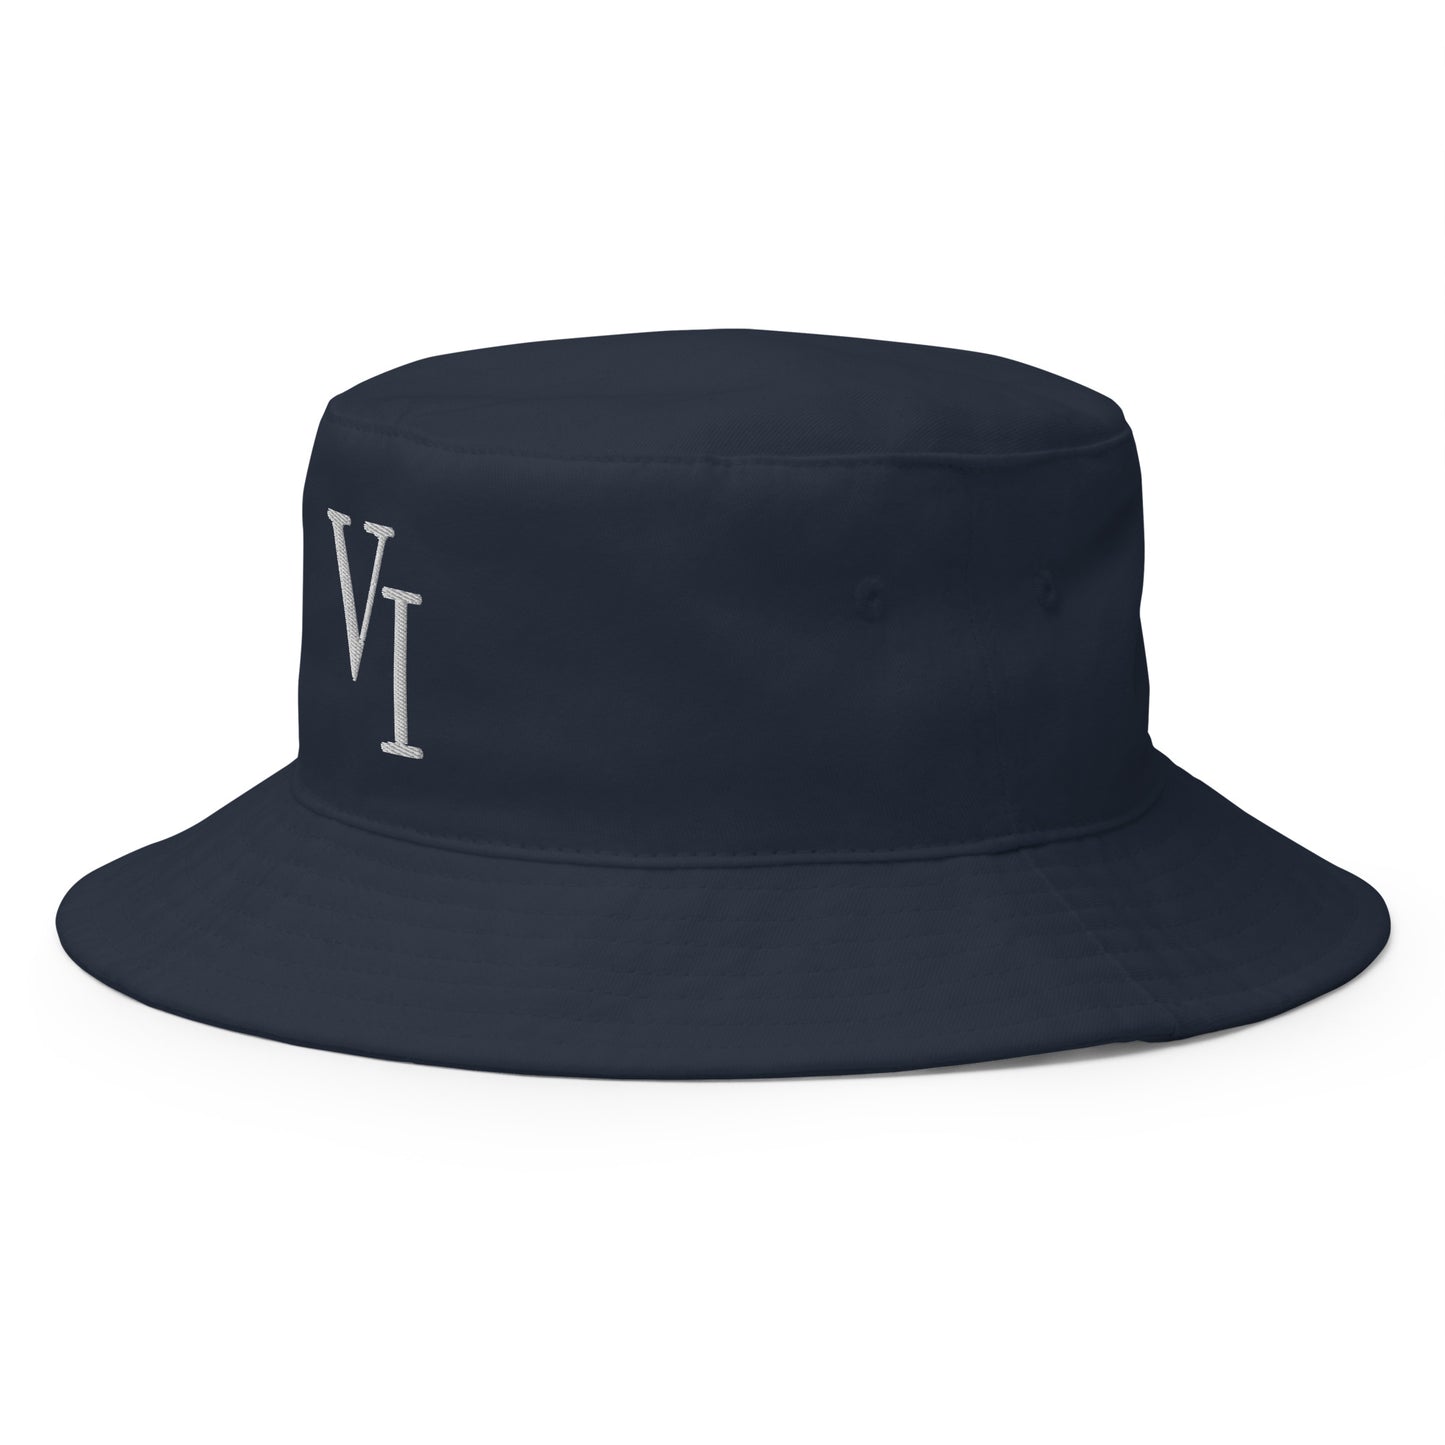 VI Black Bucket Hat | Phade Fashion Virgin Islands